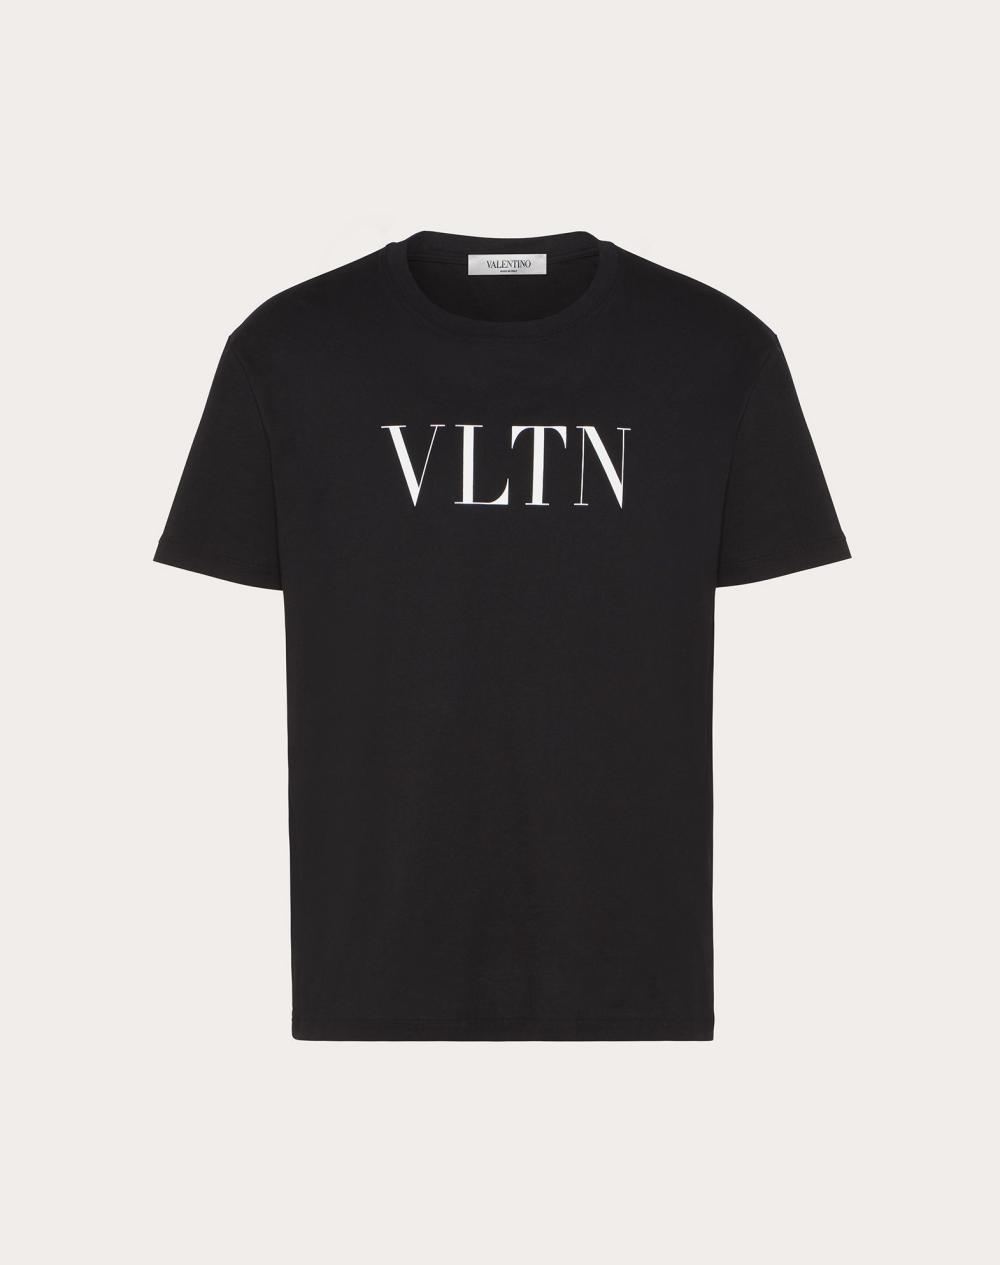 valentino vltn t shirt - 2021年Q3最抢手的10件时尚单品，彩色玻璃珠项链竟榜上有名！